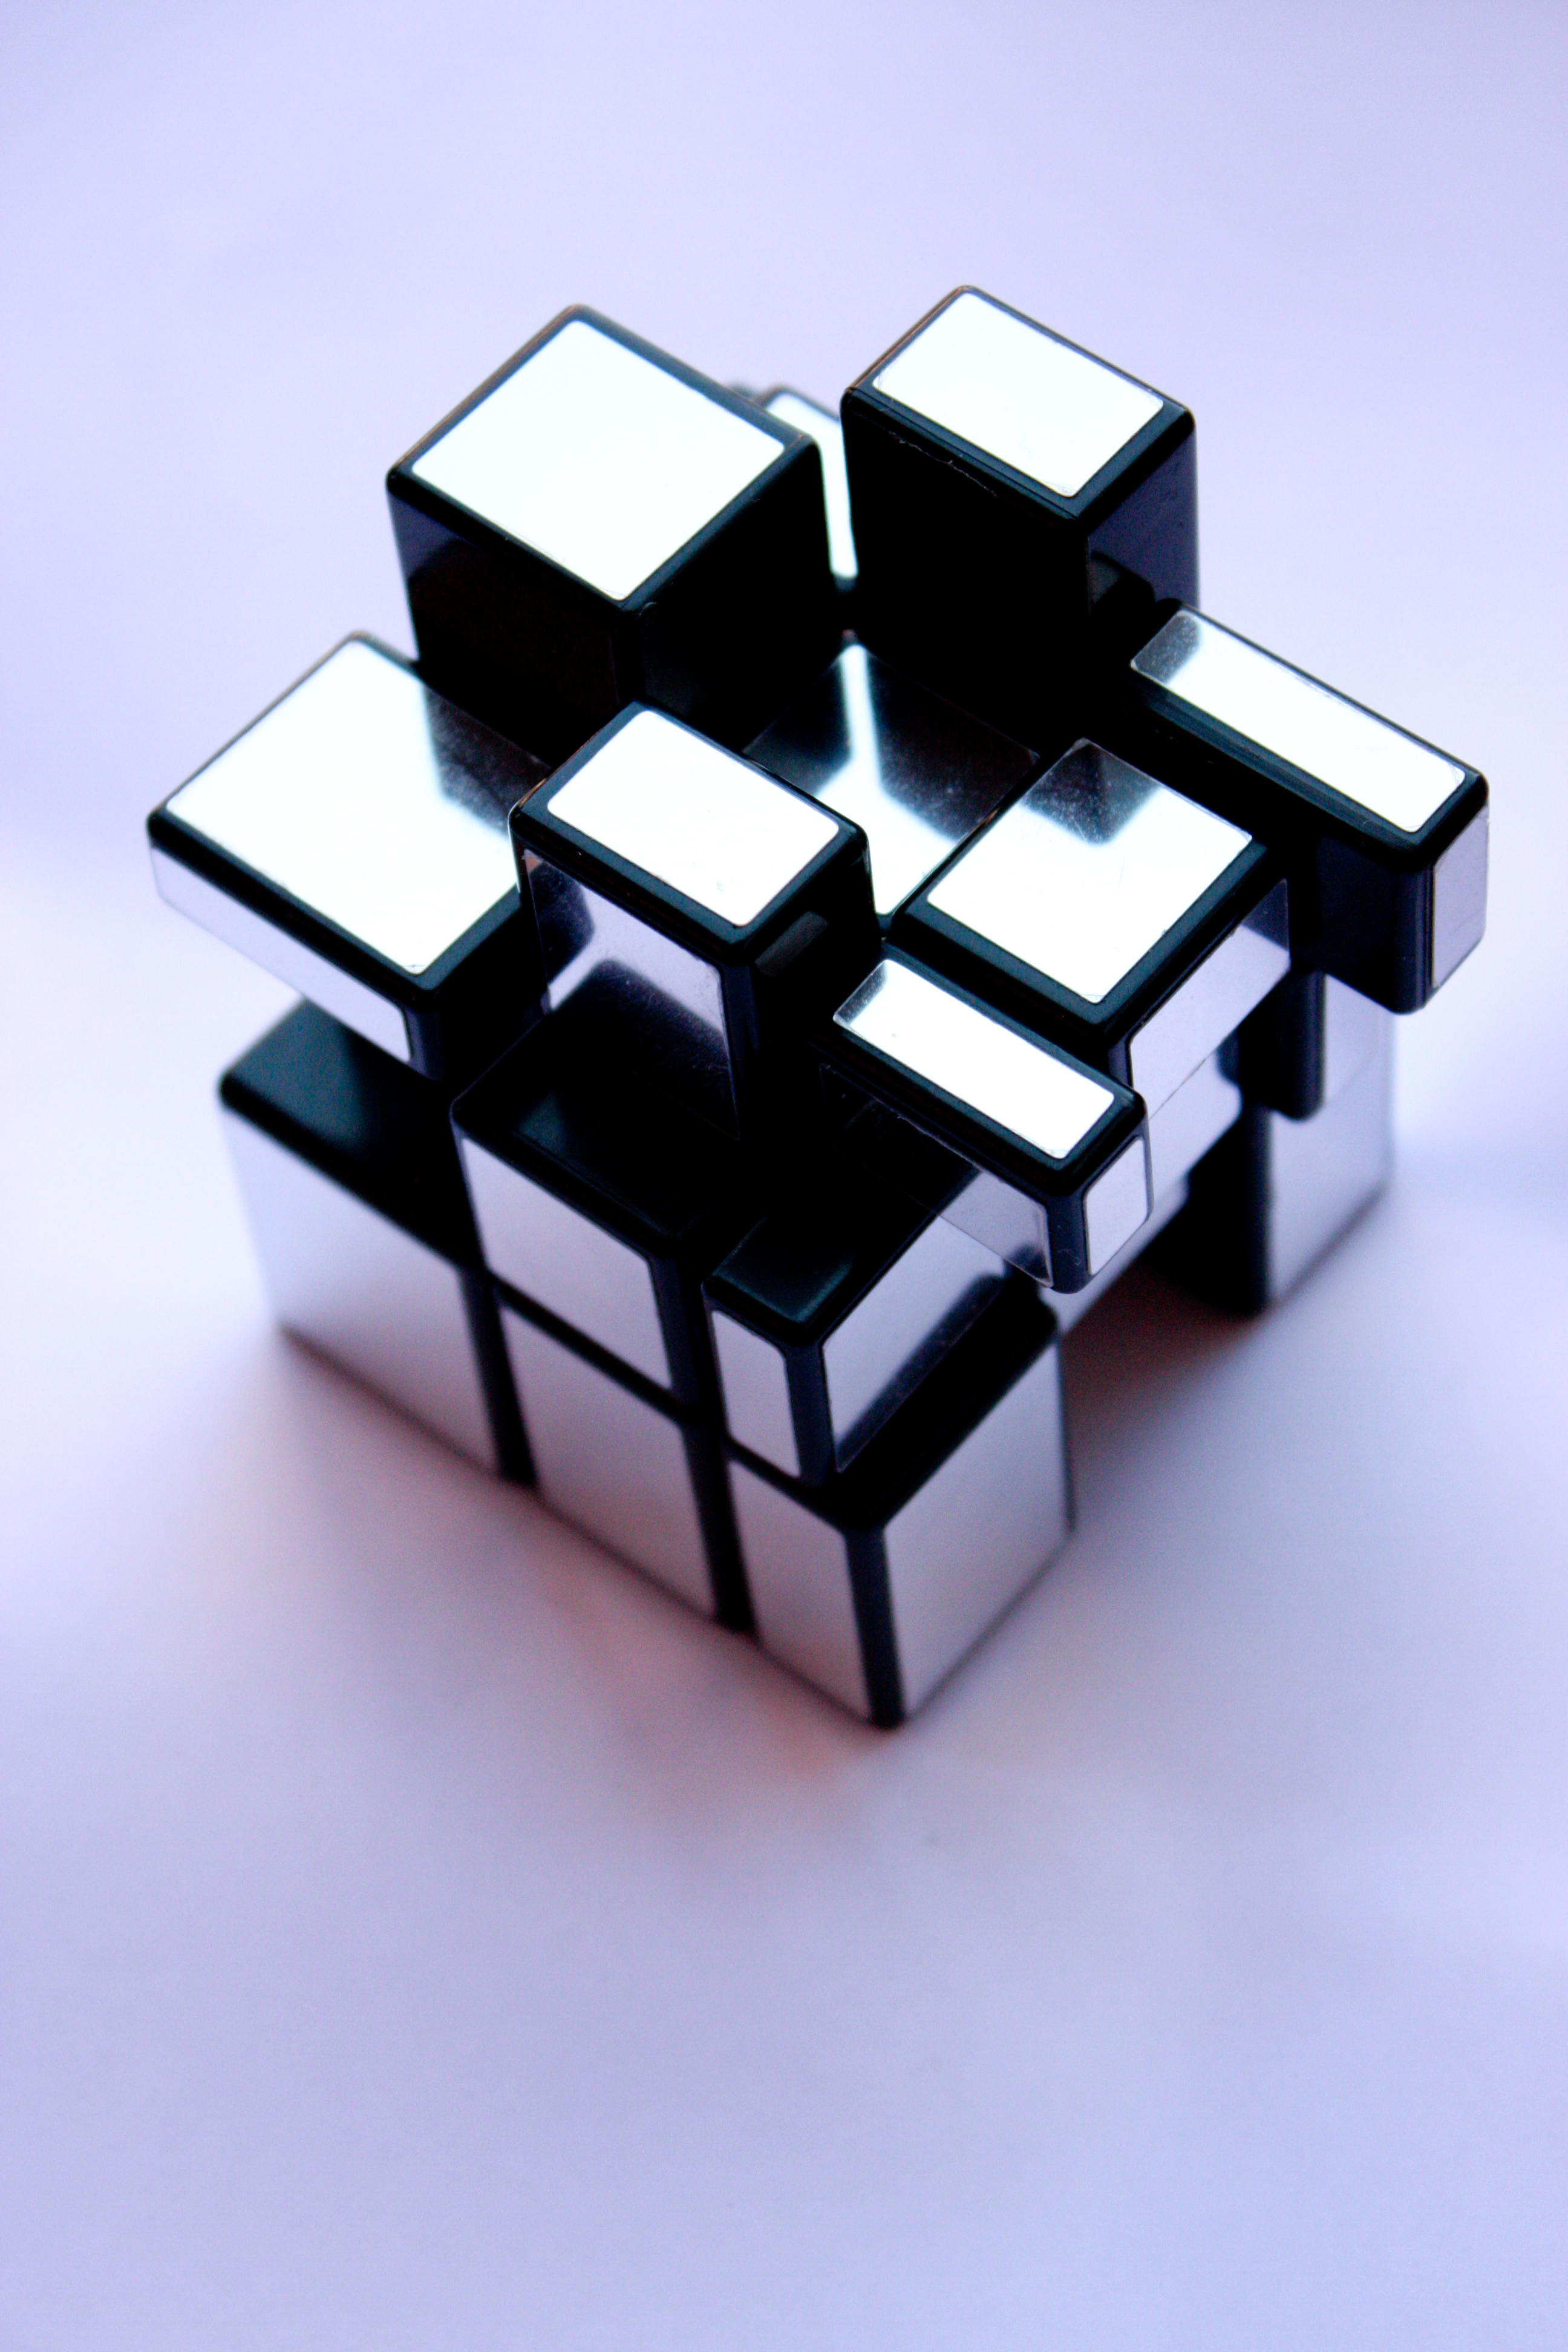 Kubus Rubik X Dimensi Crazy Log Of The Hungry Biologist